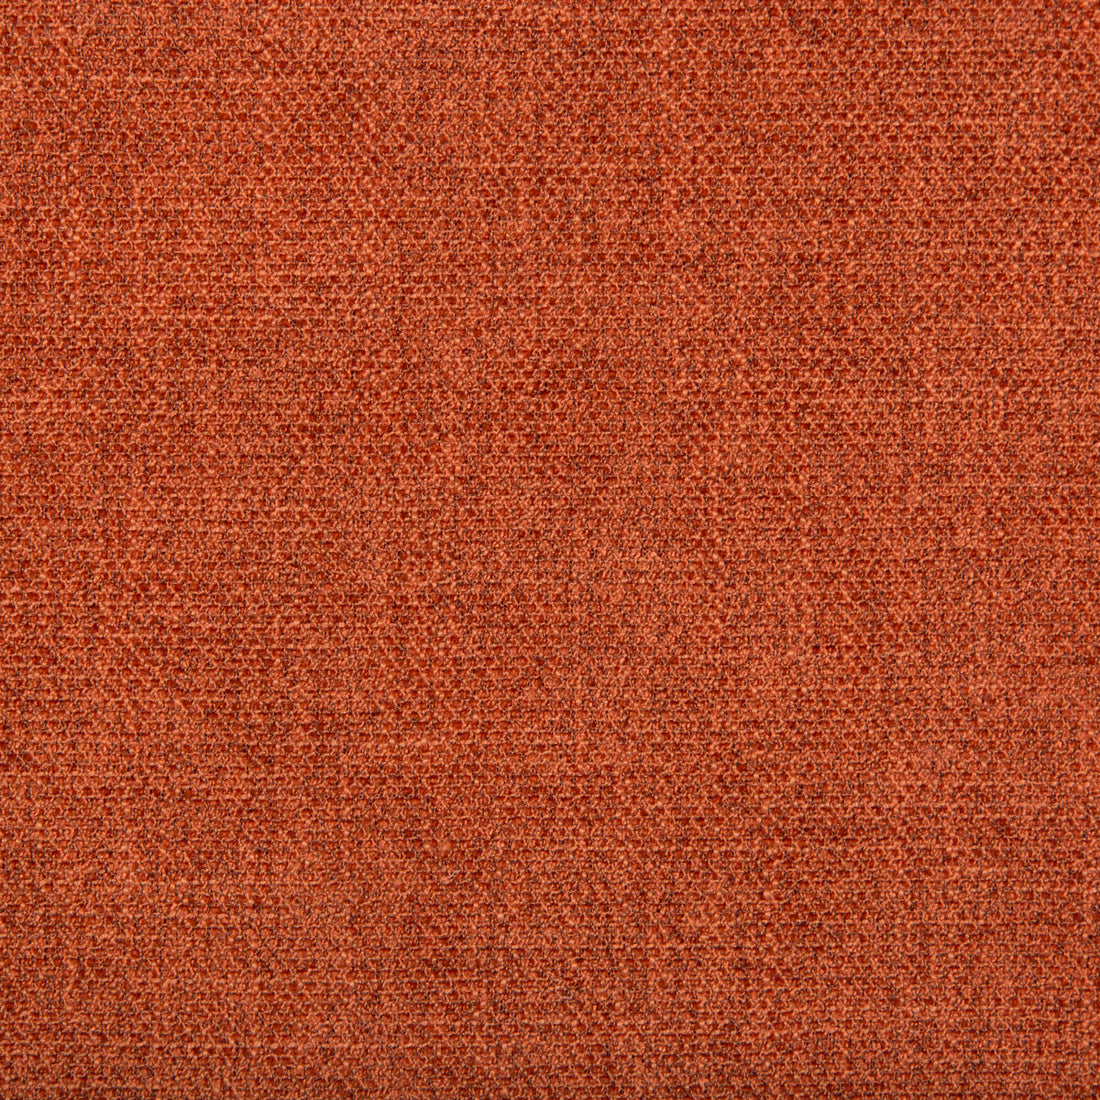 Kf Smt fabric - pattern 35060.12.0 - by Kravet Smart in the Performance Kravetarmor collection